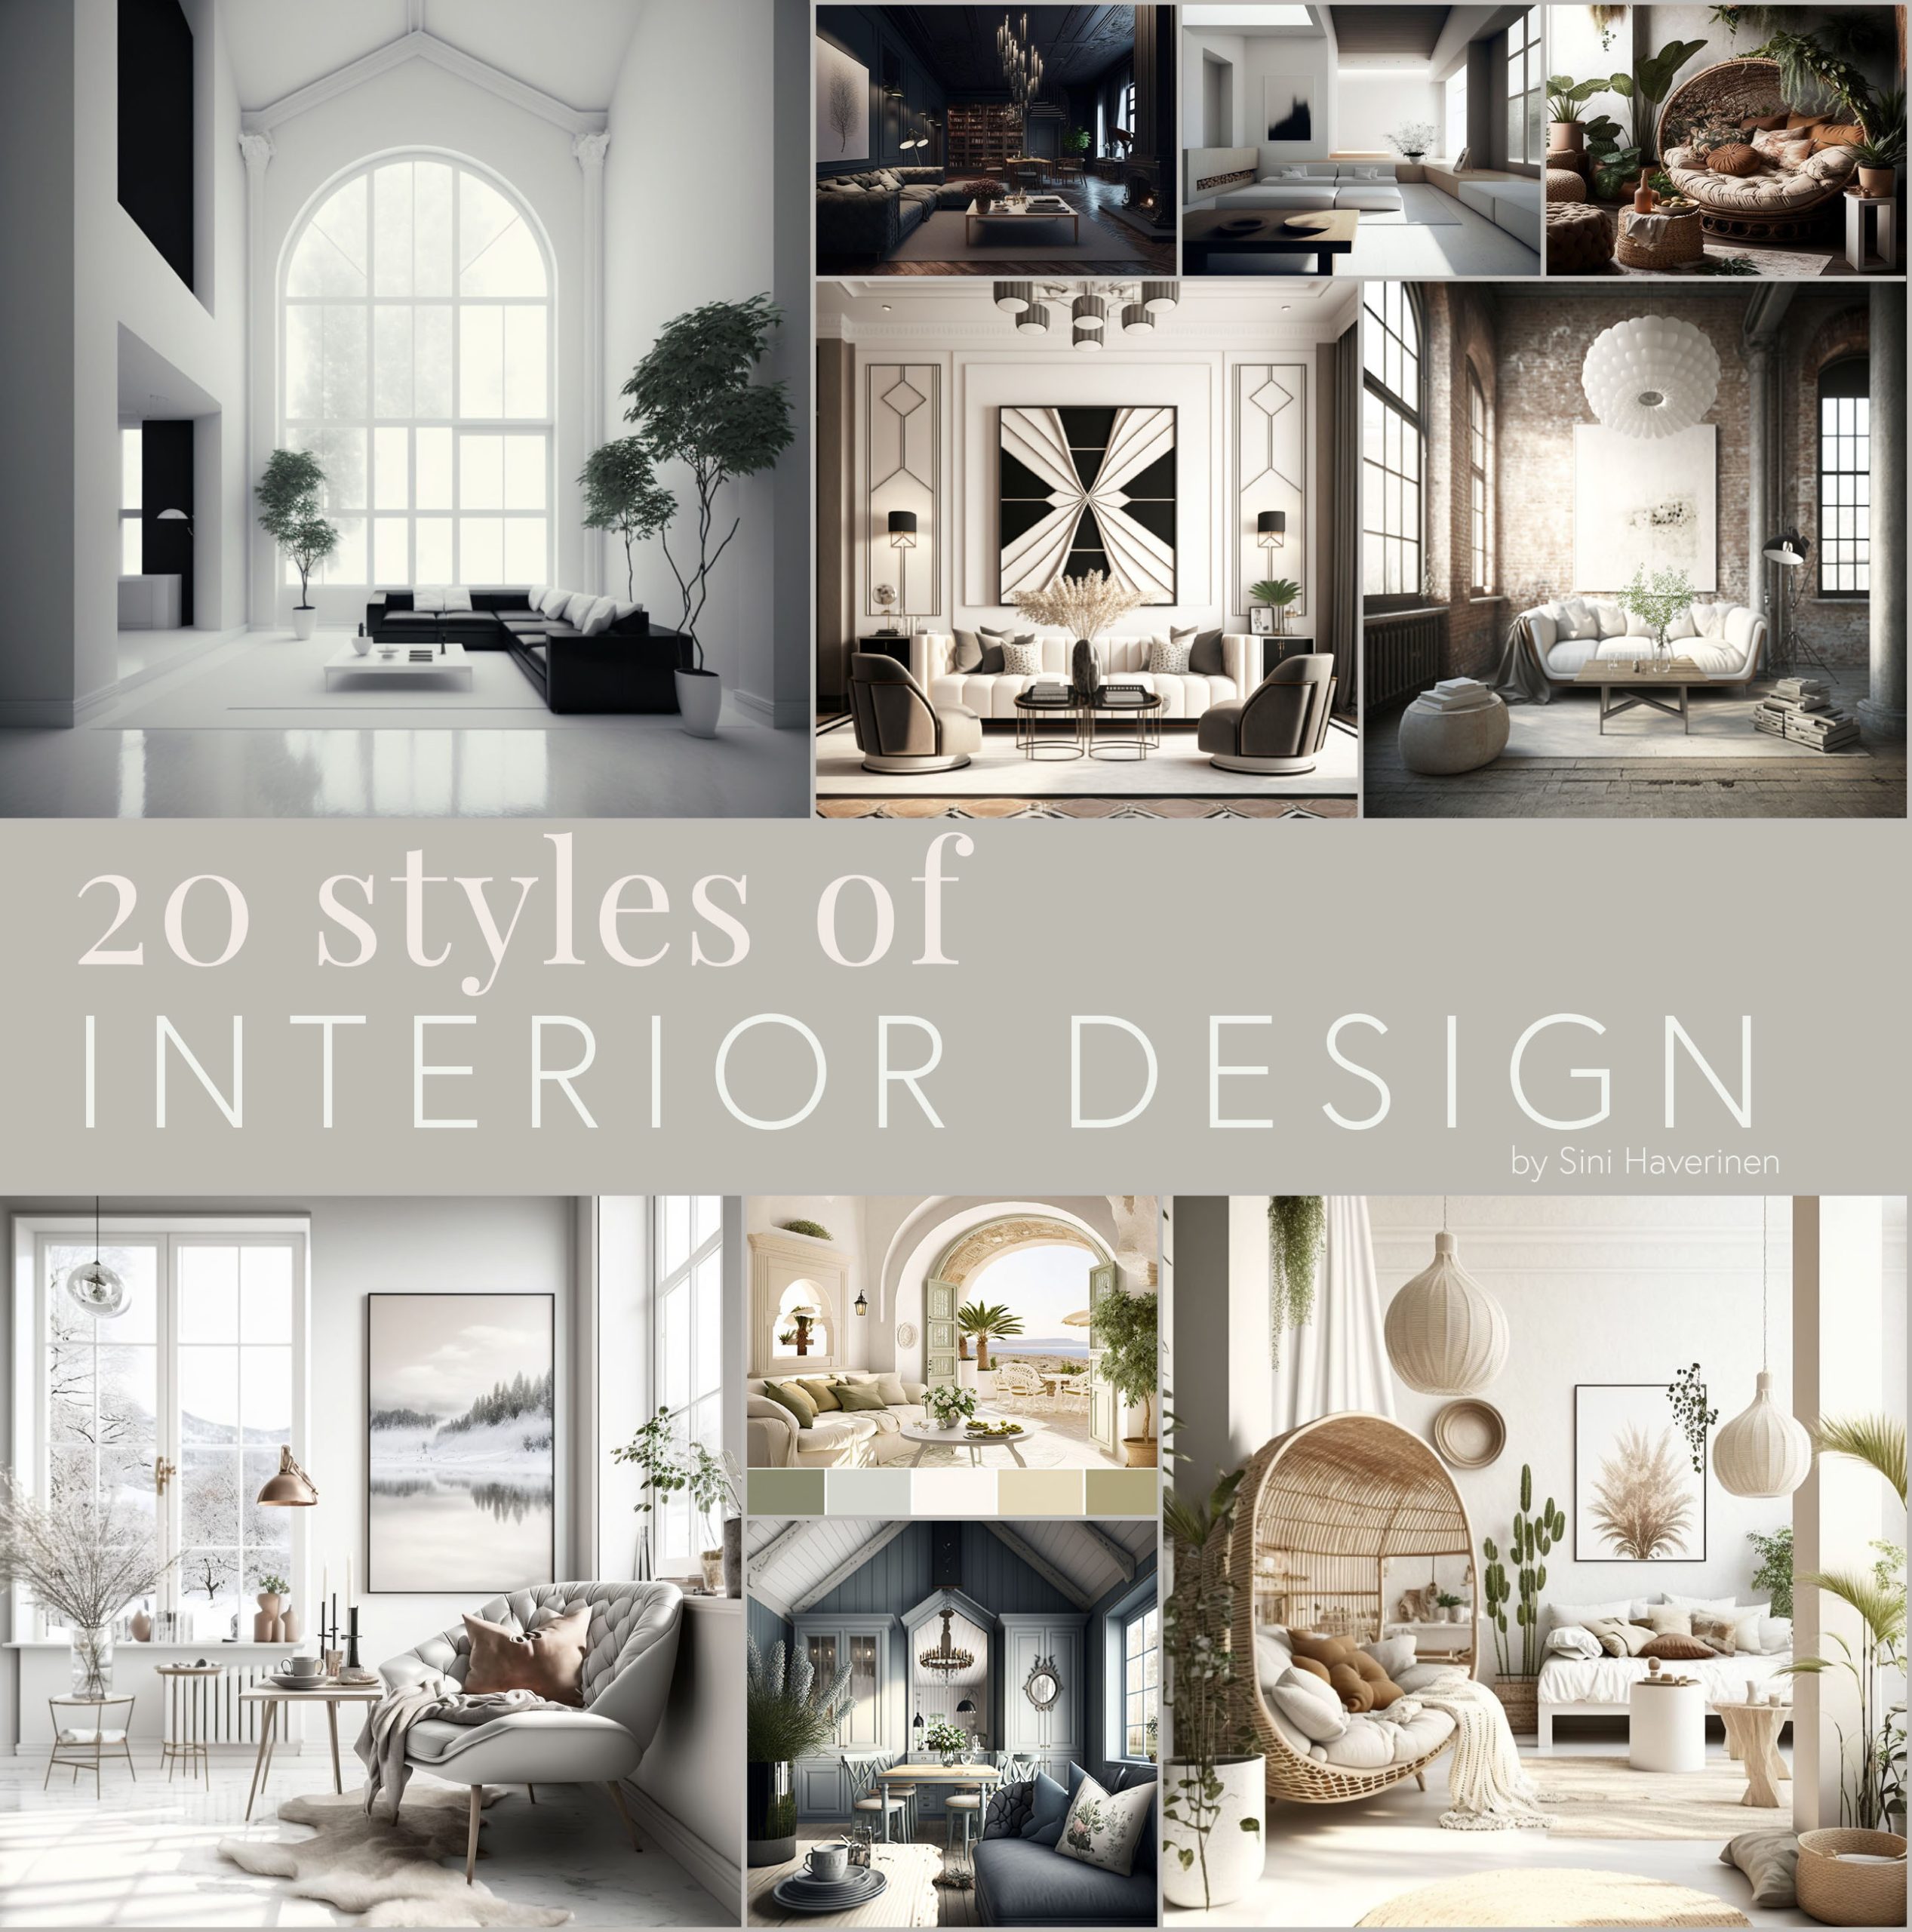 20 styles of Interior design